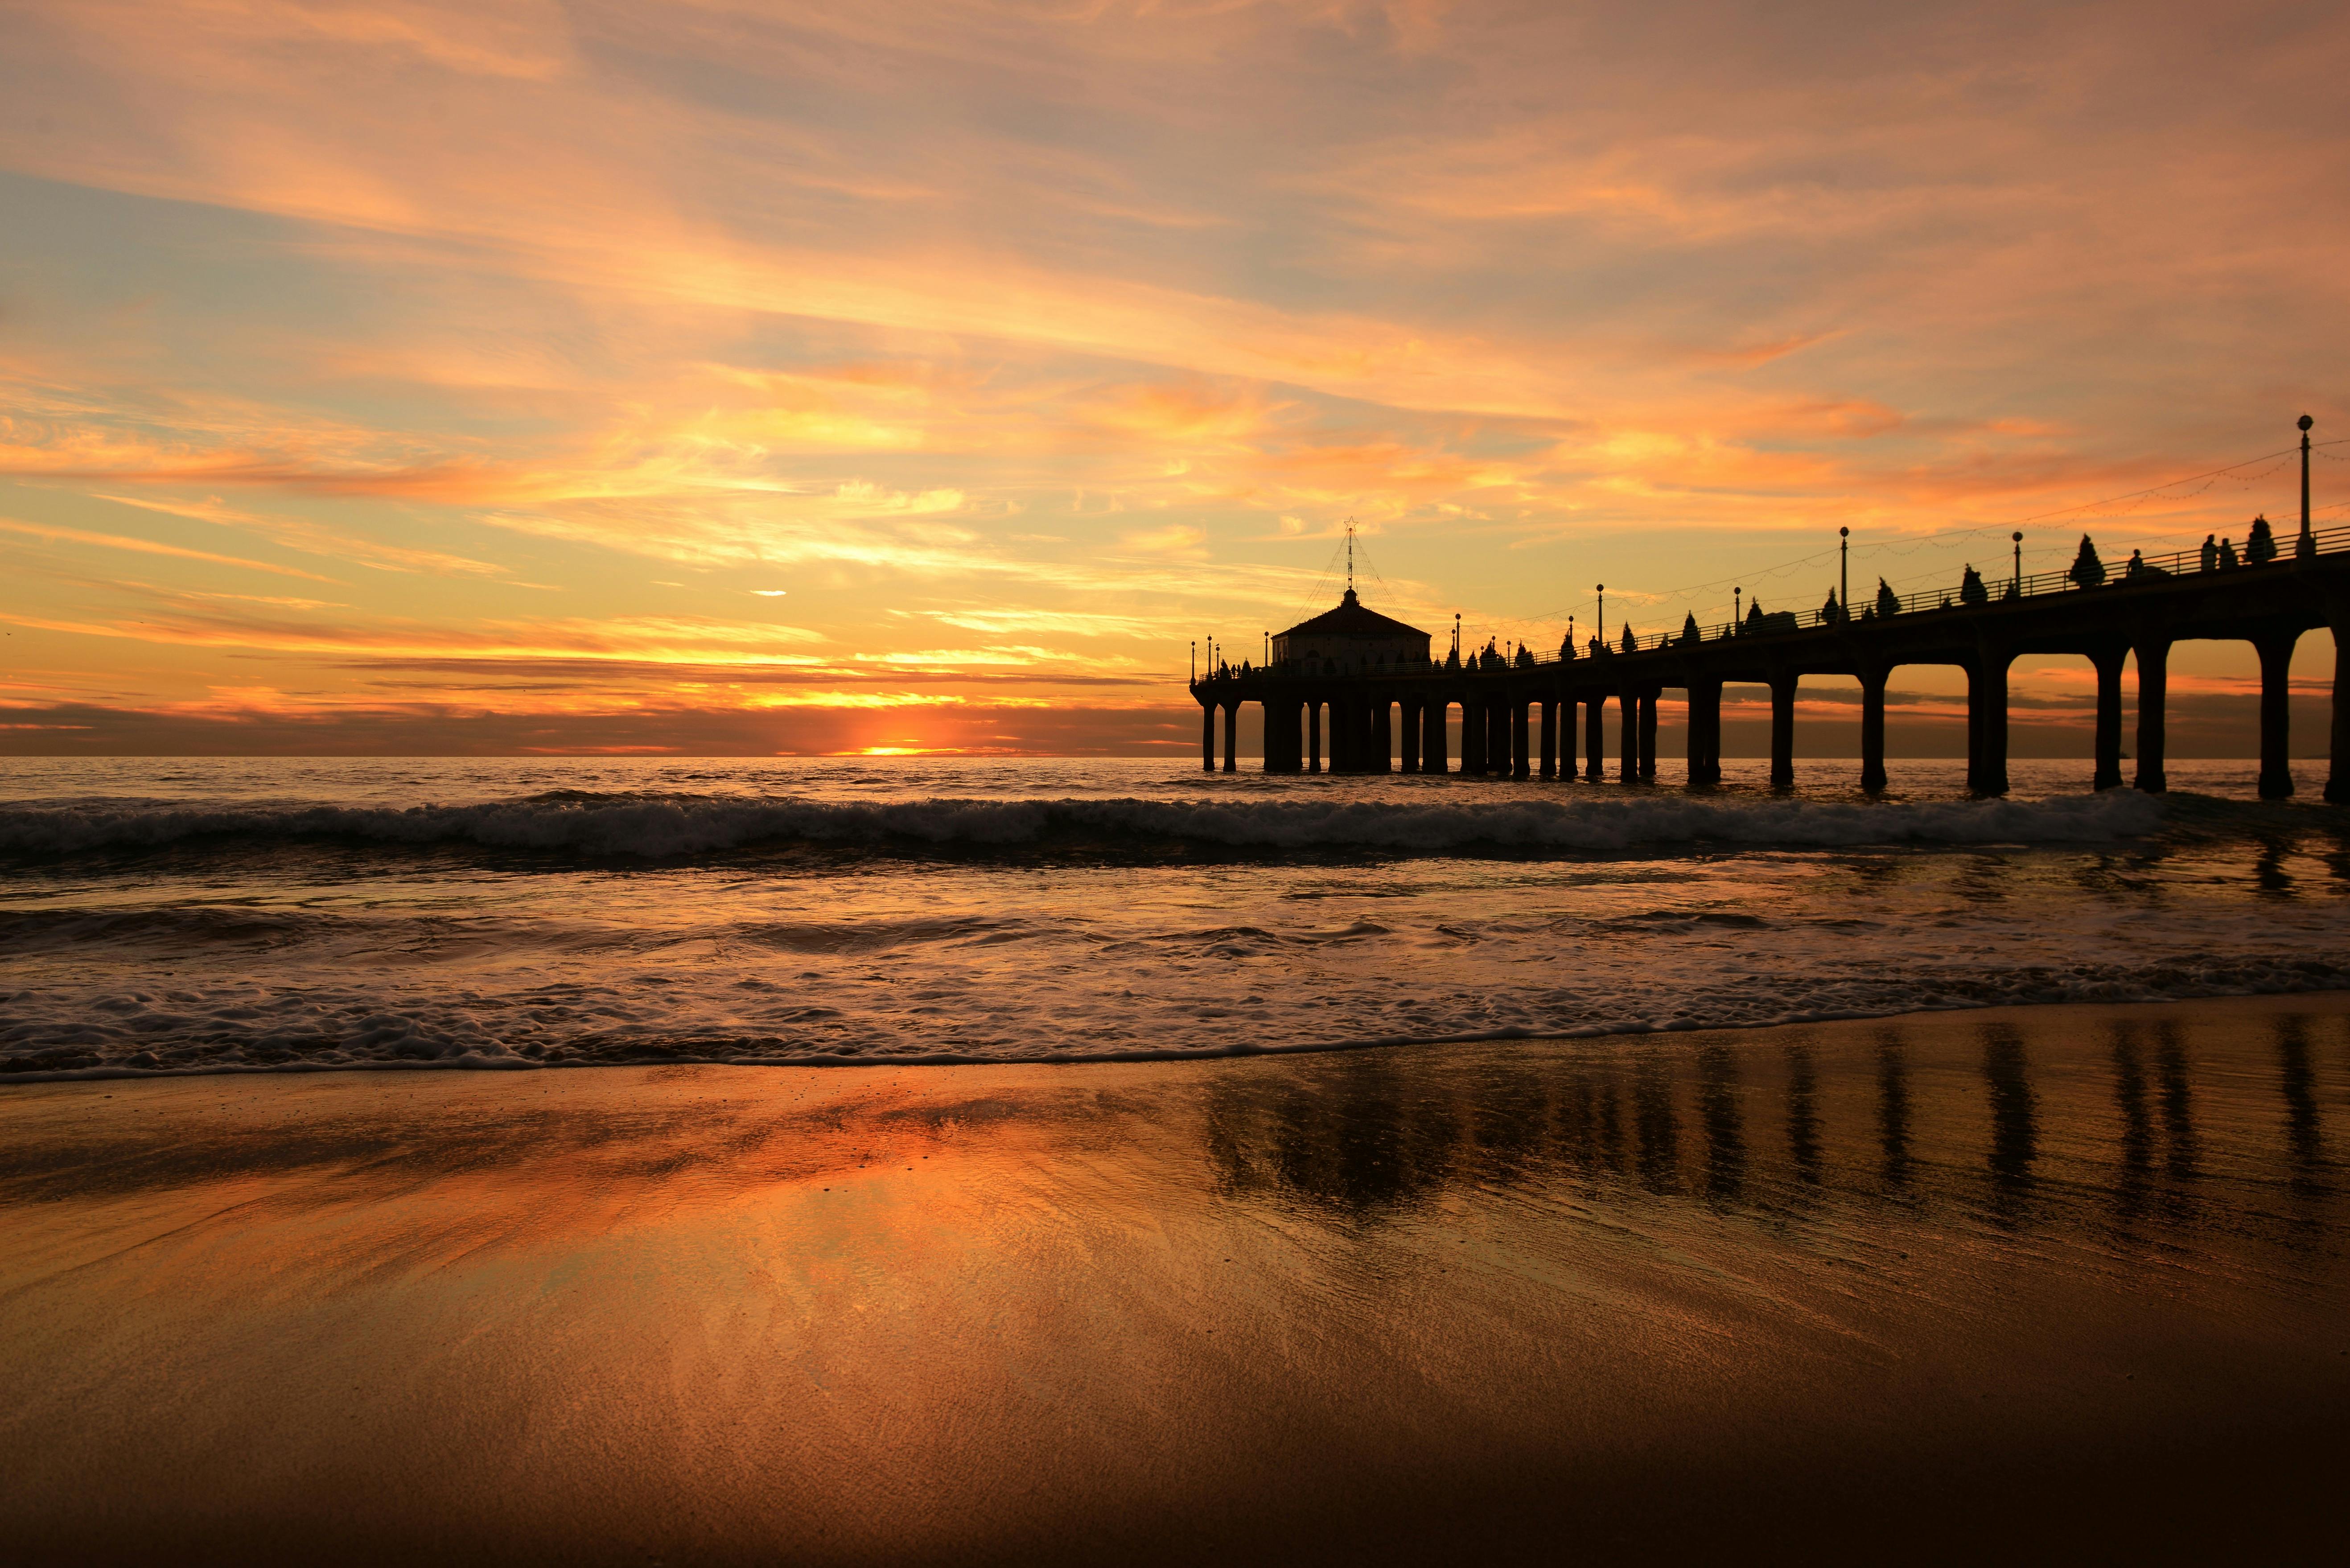 https://images.pexels.com/photos/35025/jetty-pier-sea-sunset.jpg?cs=srgb&dl=pexels-pixabay-35025.jpg&fm=jpg